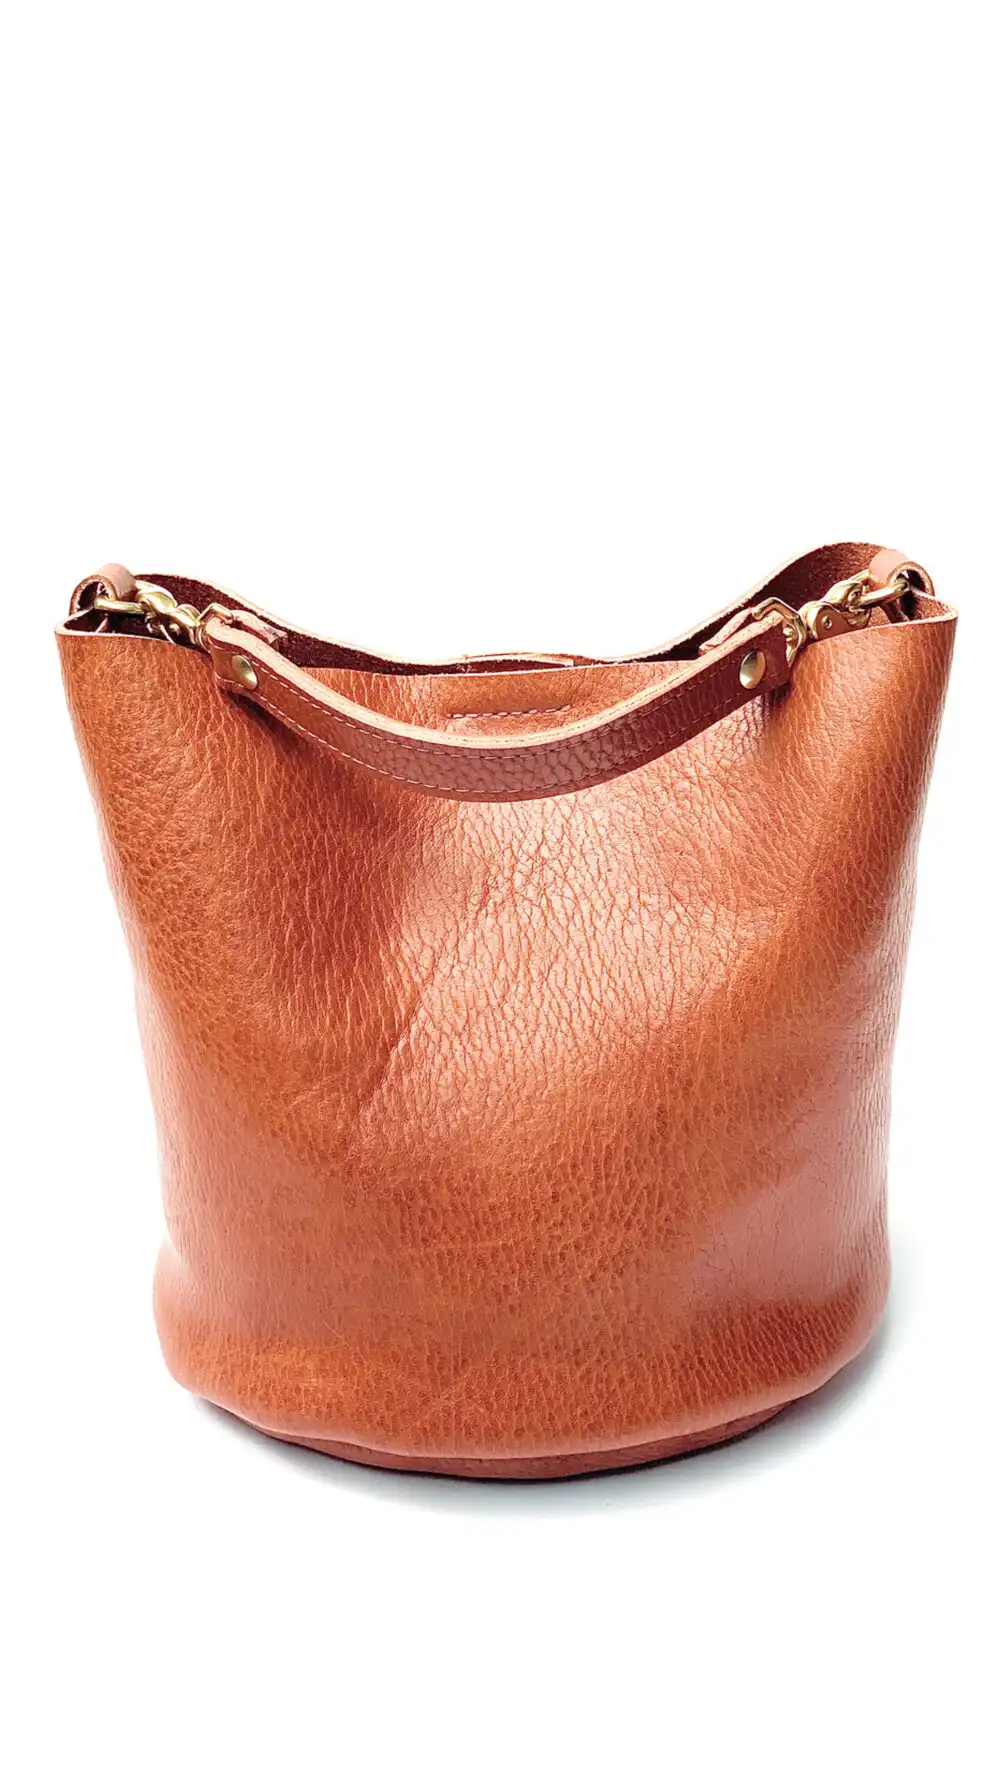 Medium Size Bucket Bag